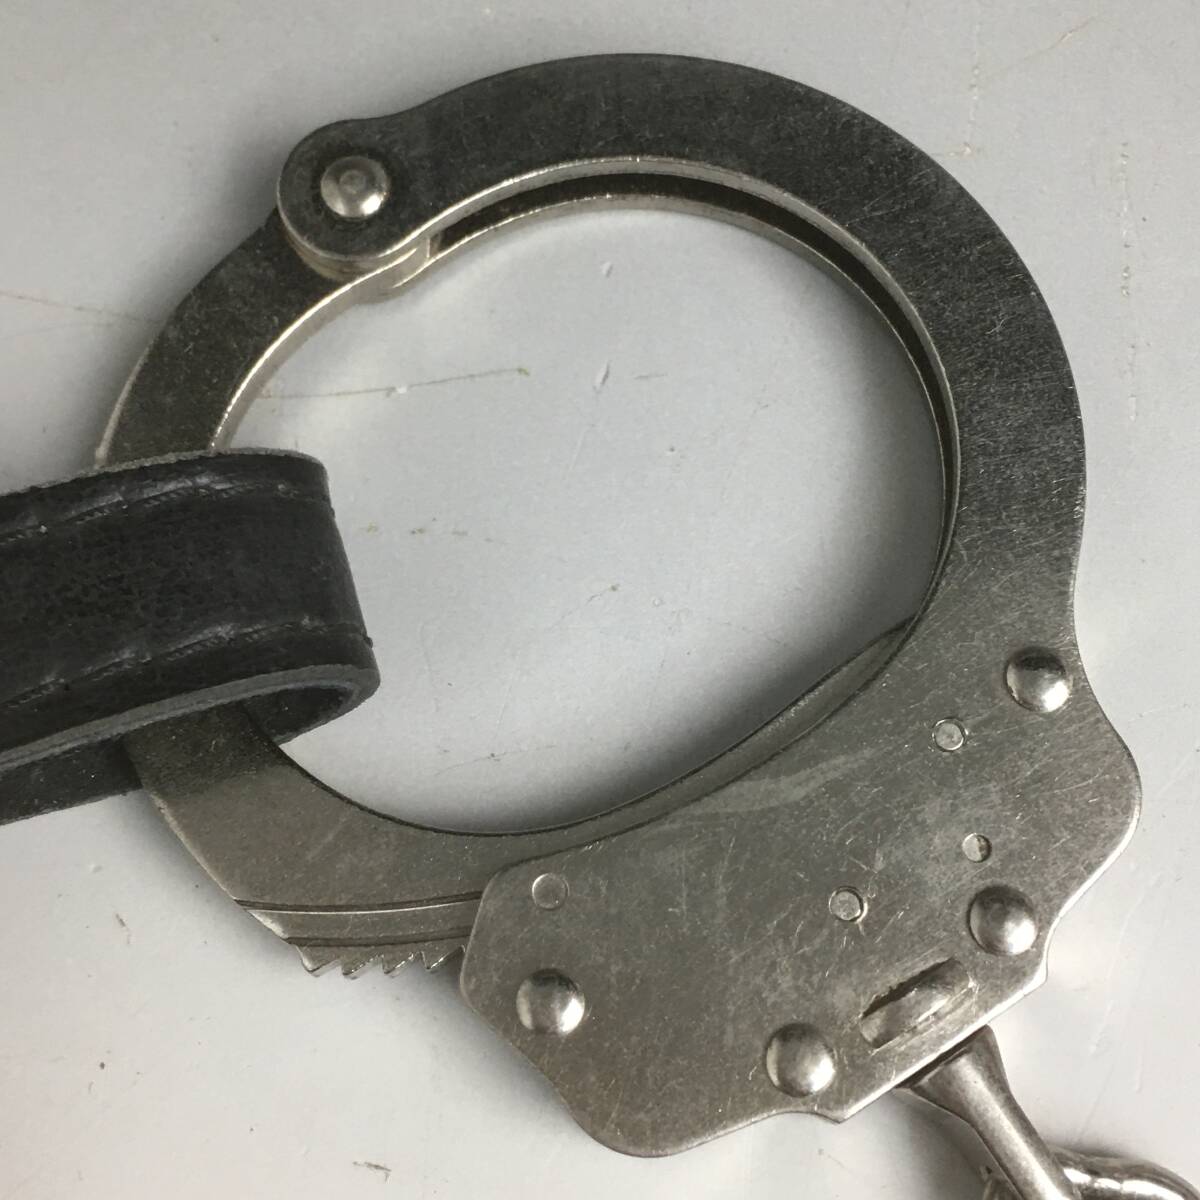 MNY1/83 Peerless 702C Handcuffs made in korea 警察 軍 サバゲー ミリタリー 装備 サバイバル 手錠 ピアレス ハンドカフの画像3